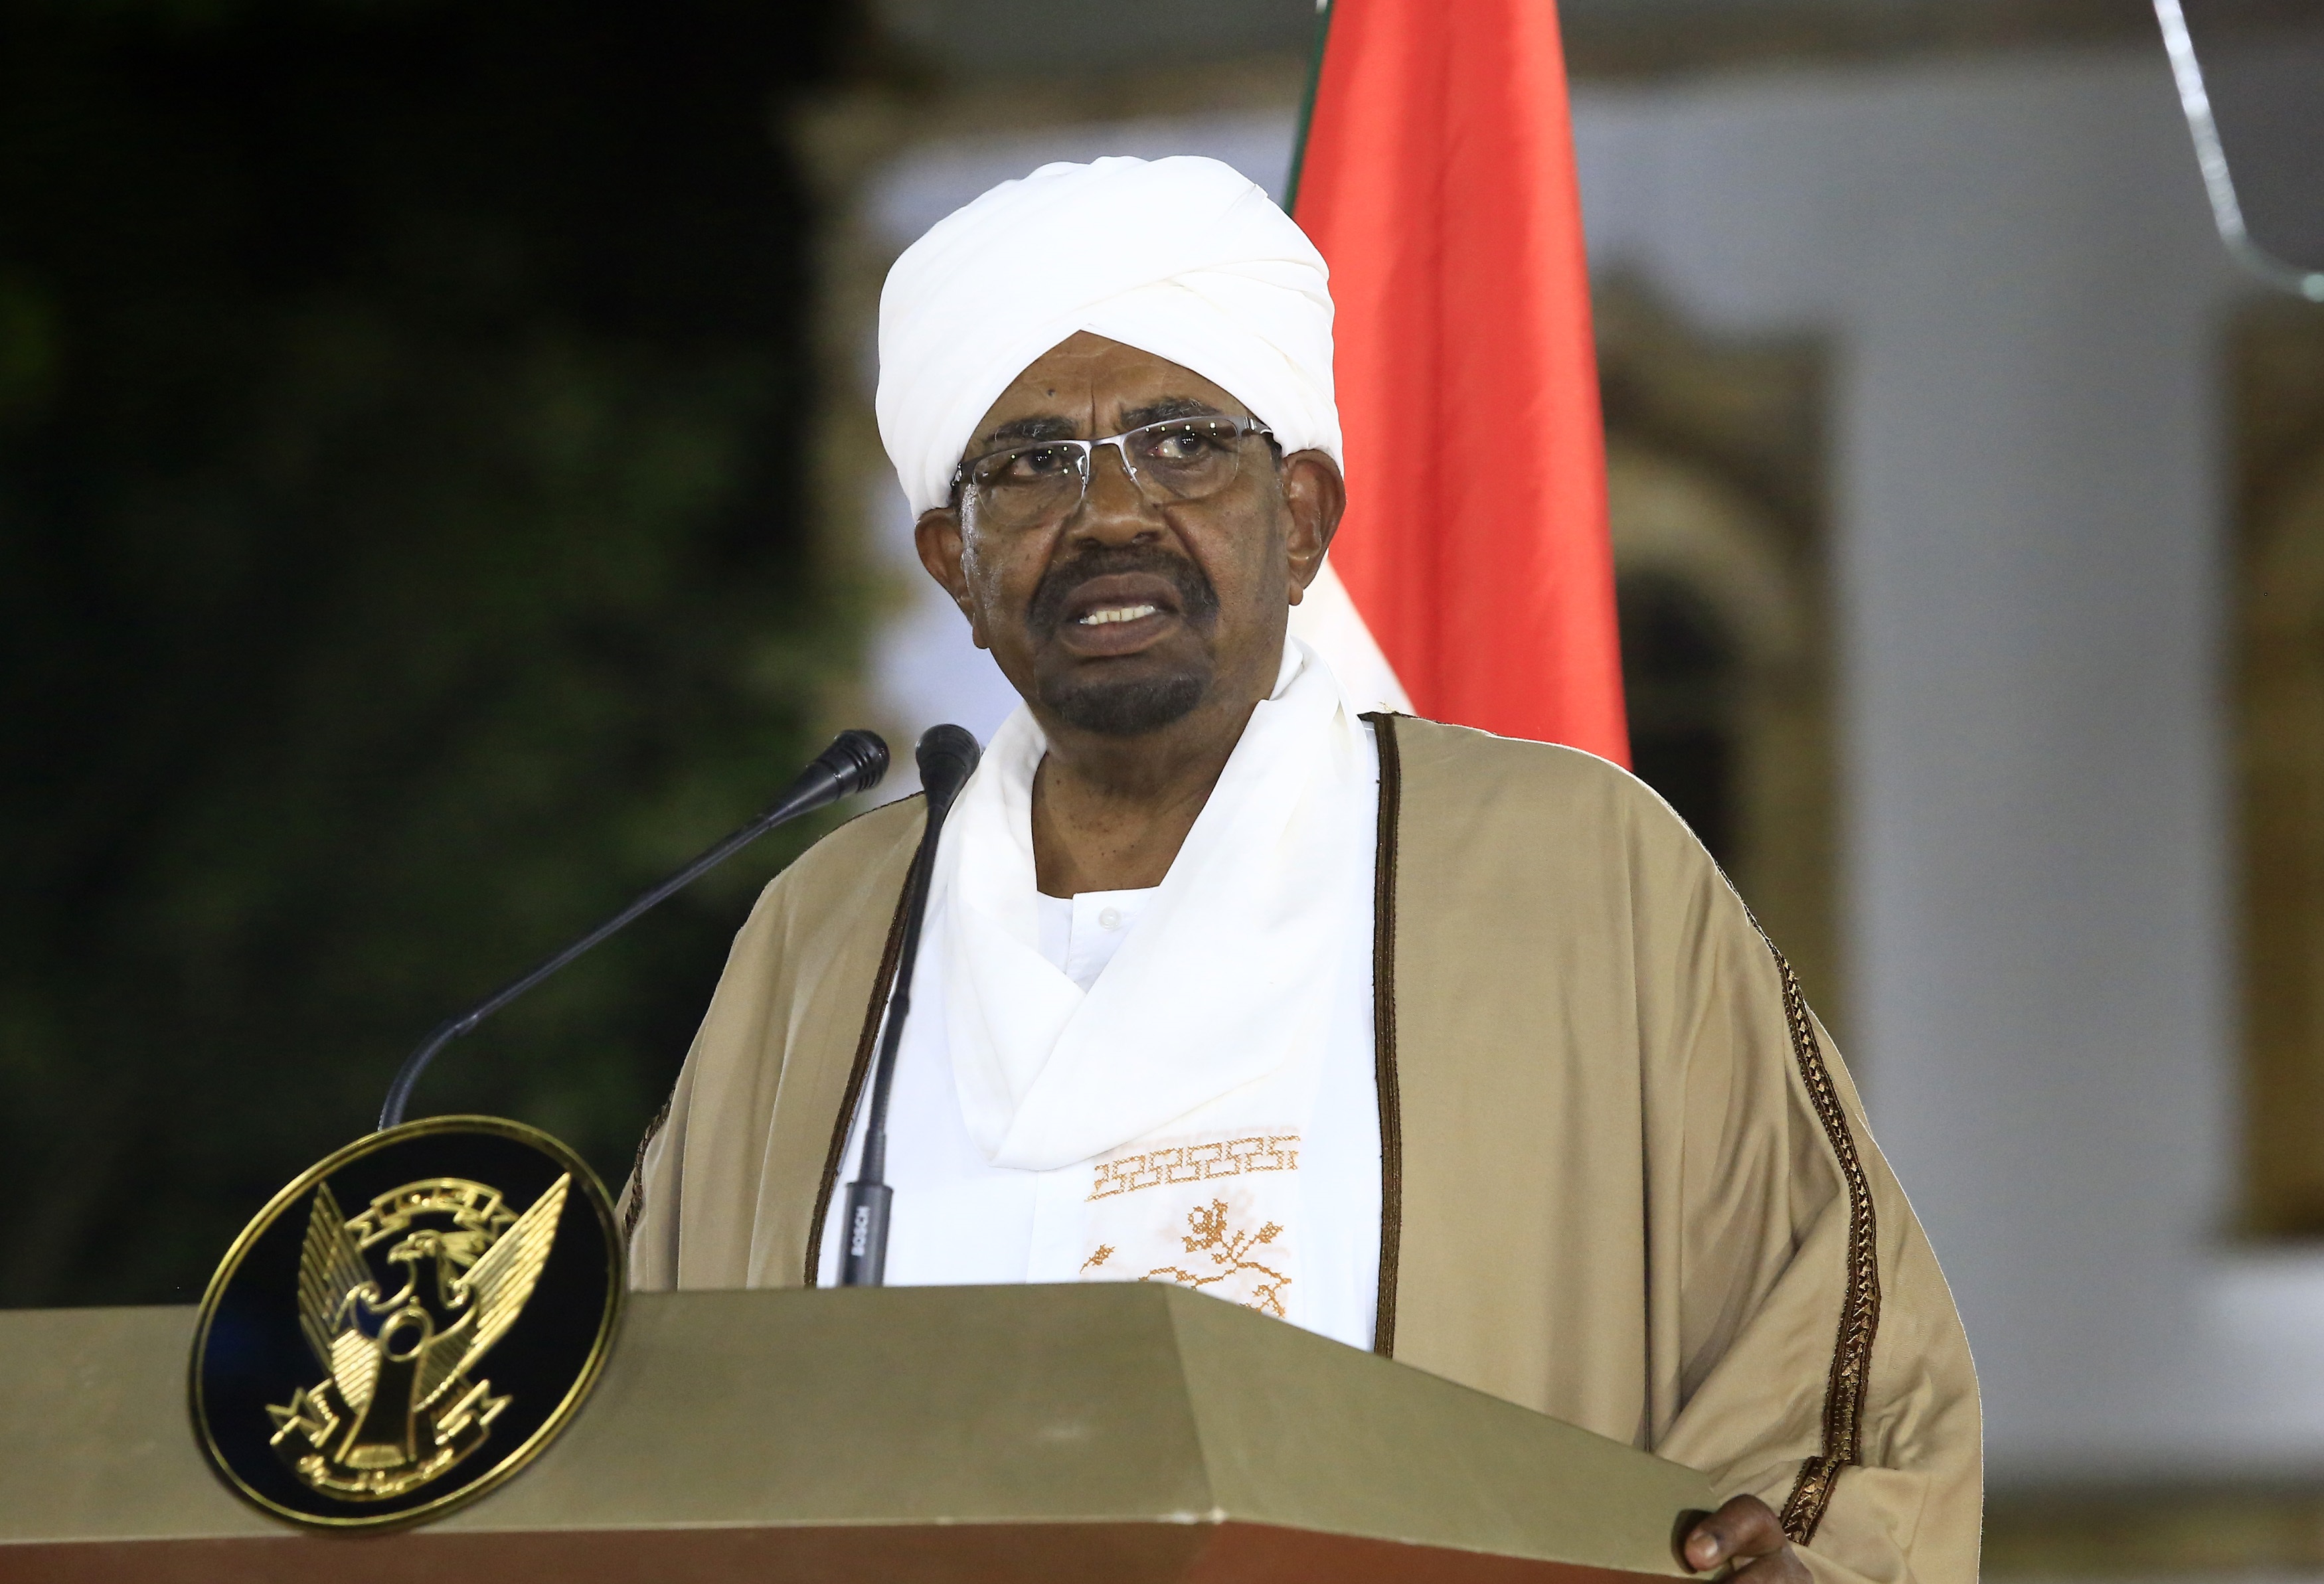 El expresidente de Sudán Omar Hasán al Bashir
MOHAMED KHIDIR / ZUMA PRESS 
